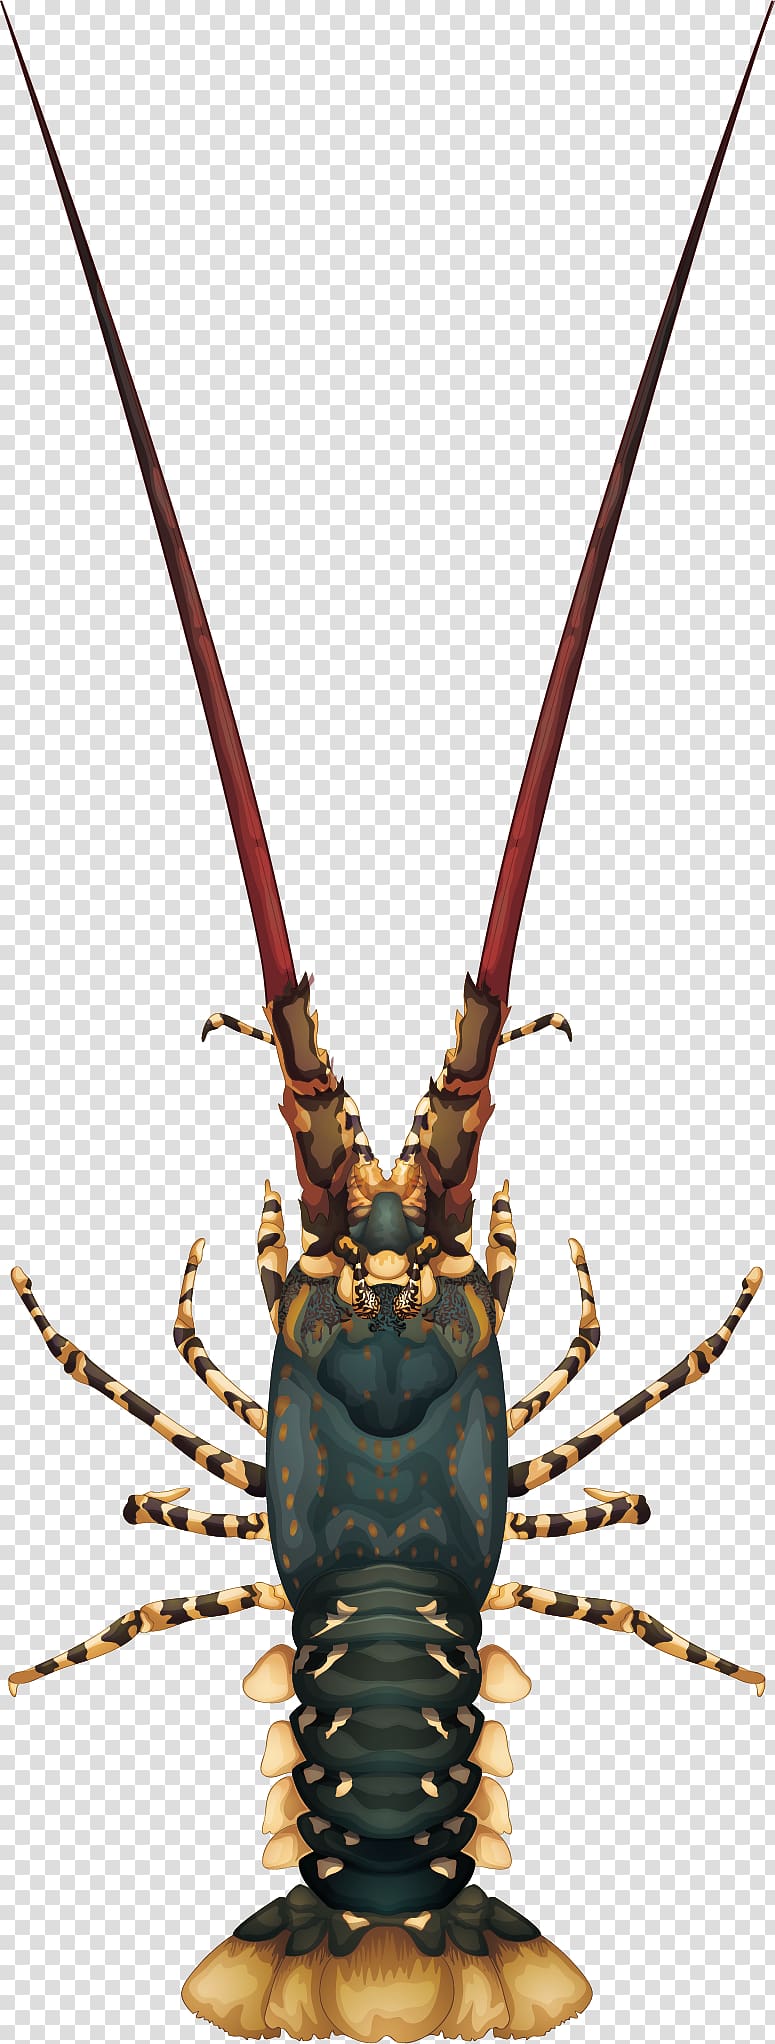 Lobster Panulirus argus Panulirus cygnus Illustration, painted large lobster transparent background PNG clipart